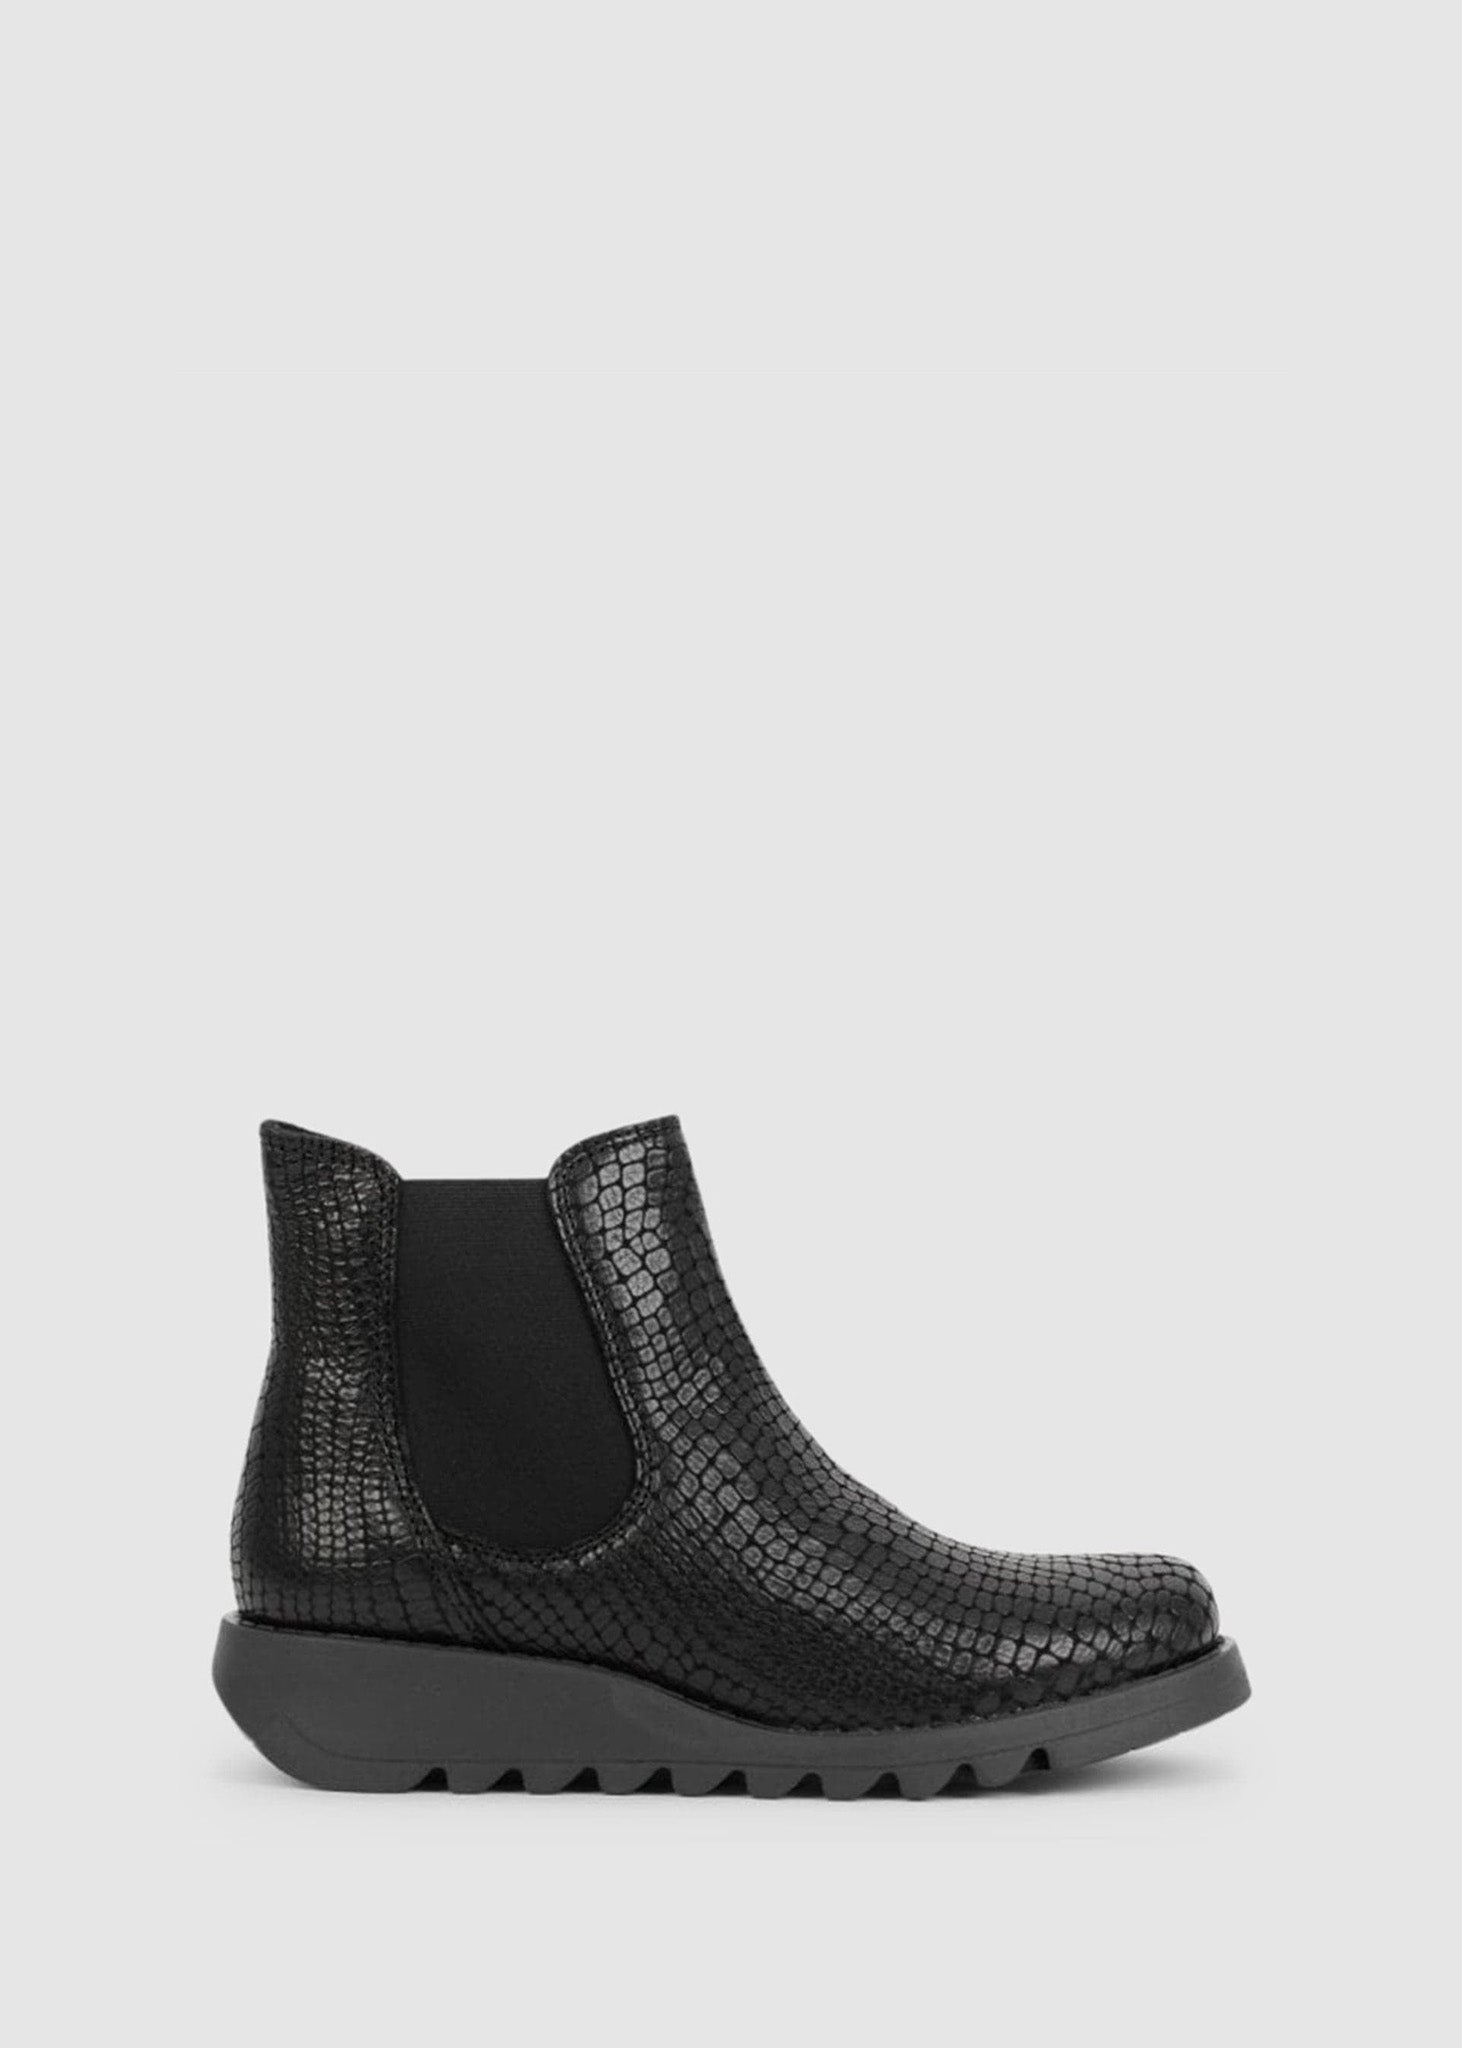 Fly London Women's Salv Black Croc Chelsea Boots - Black